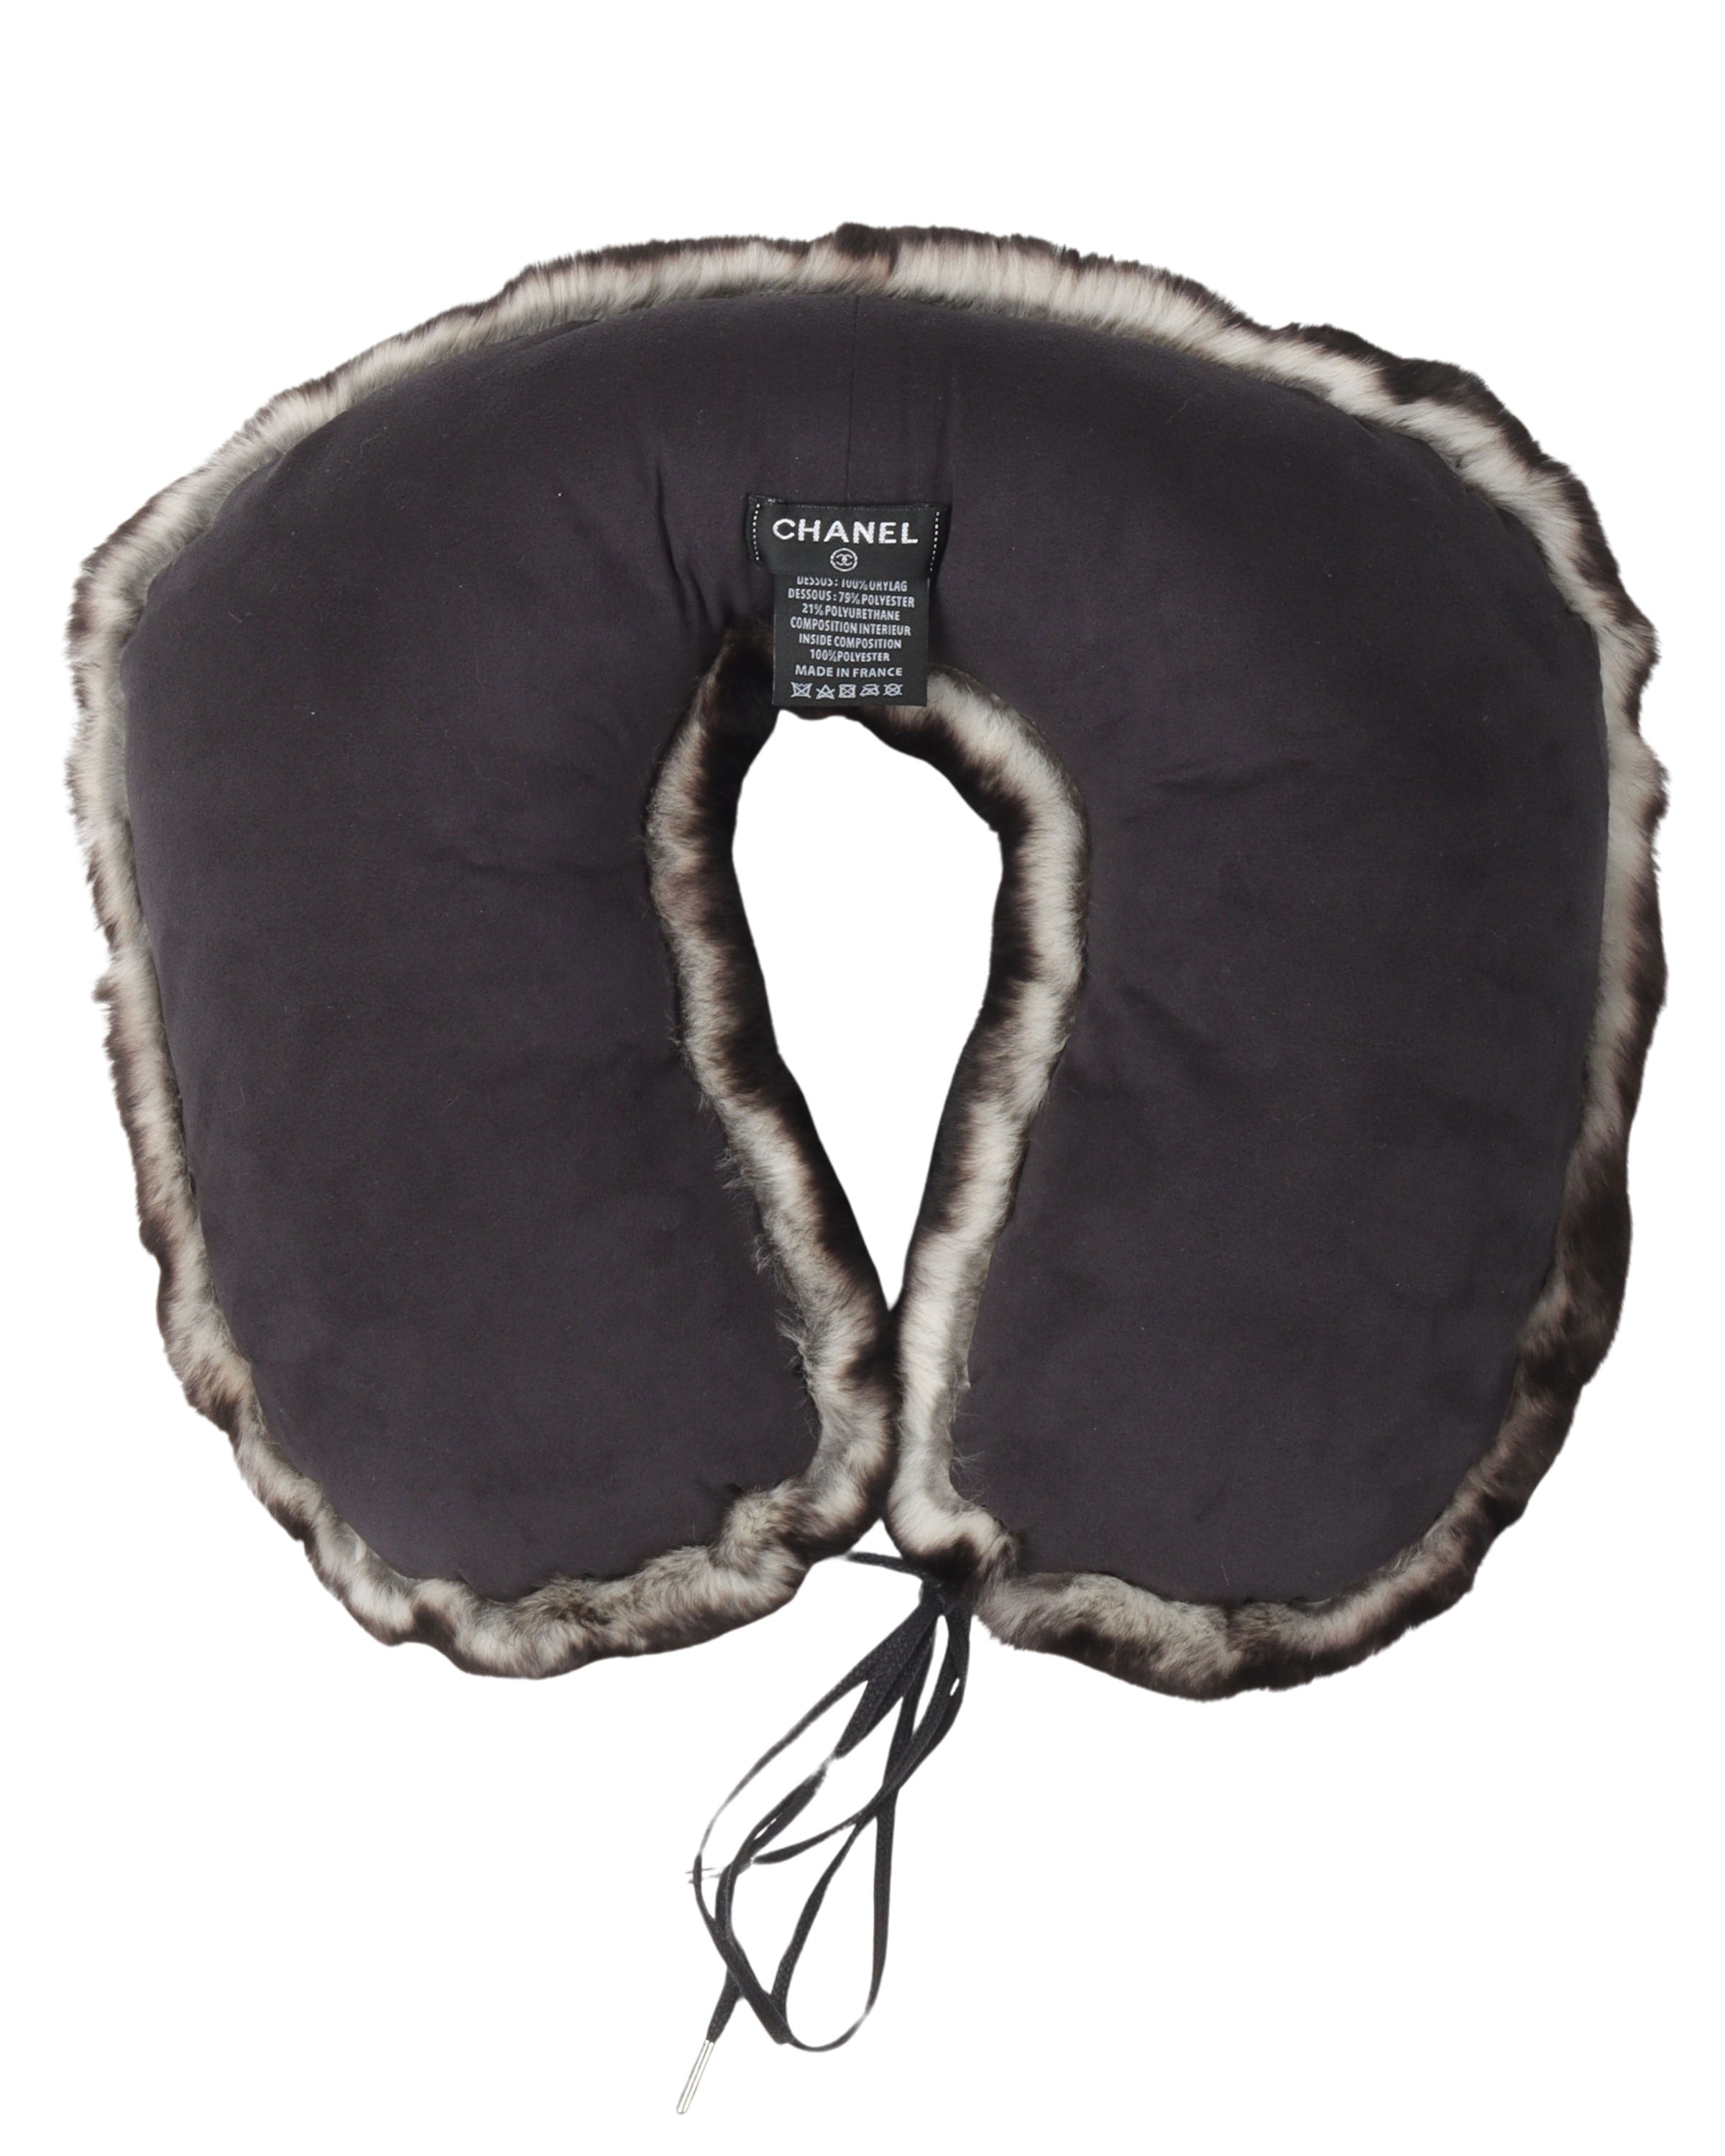 Orylag Fur Travel Pillow